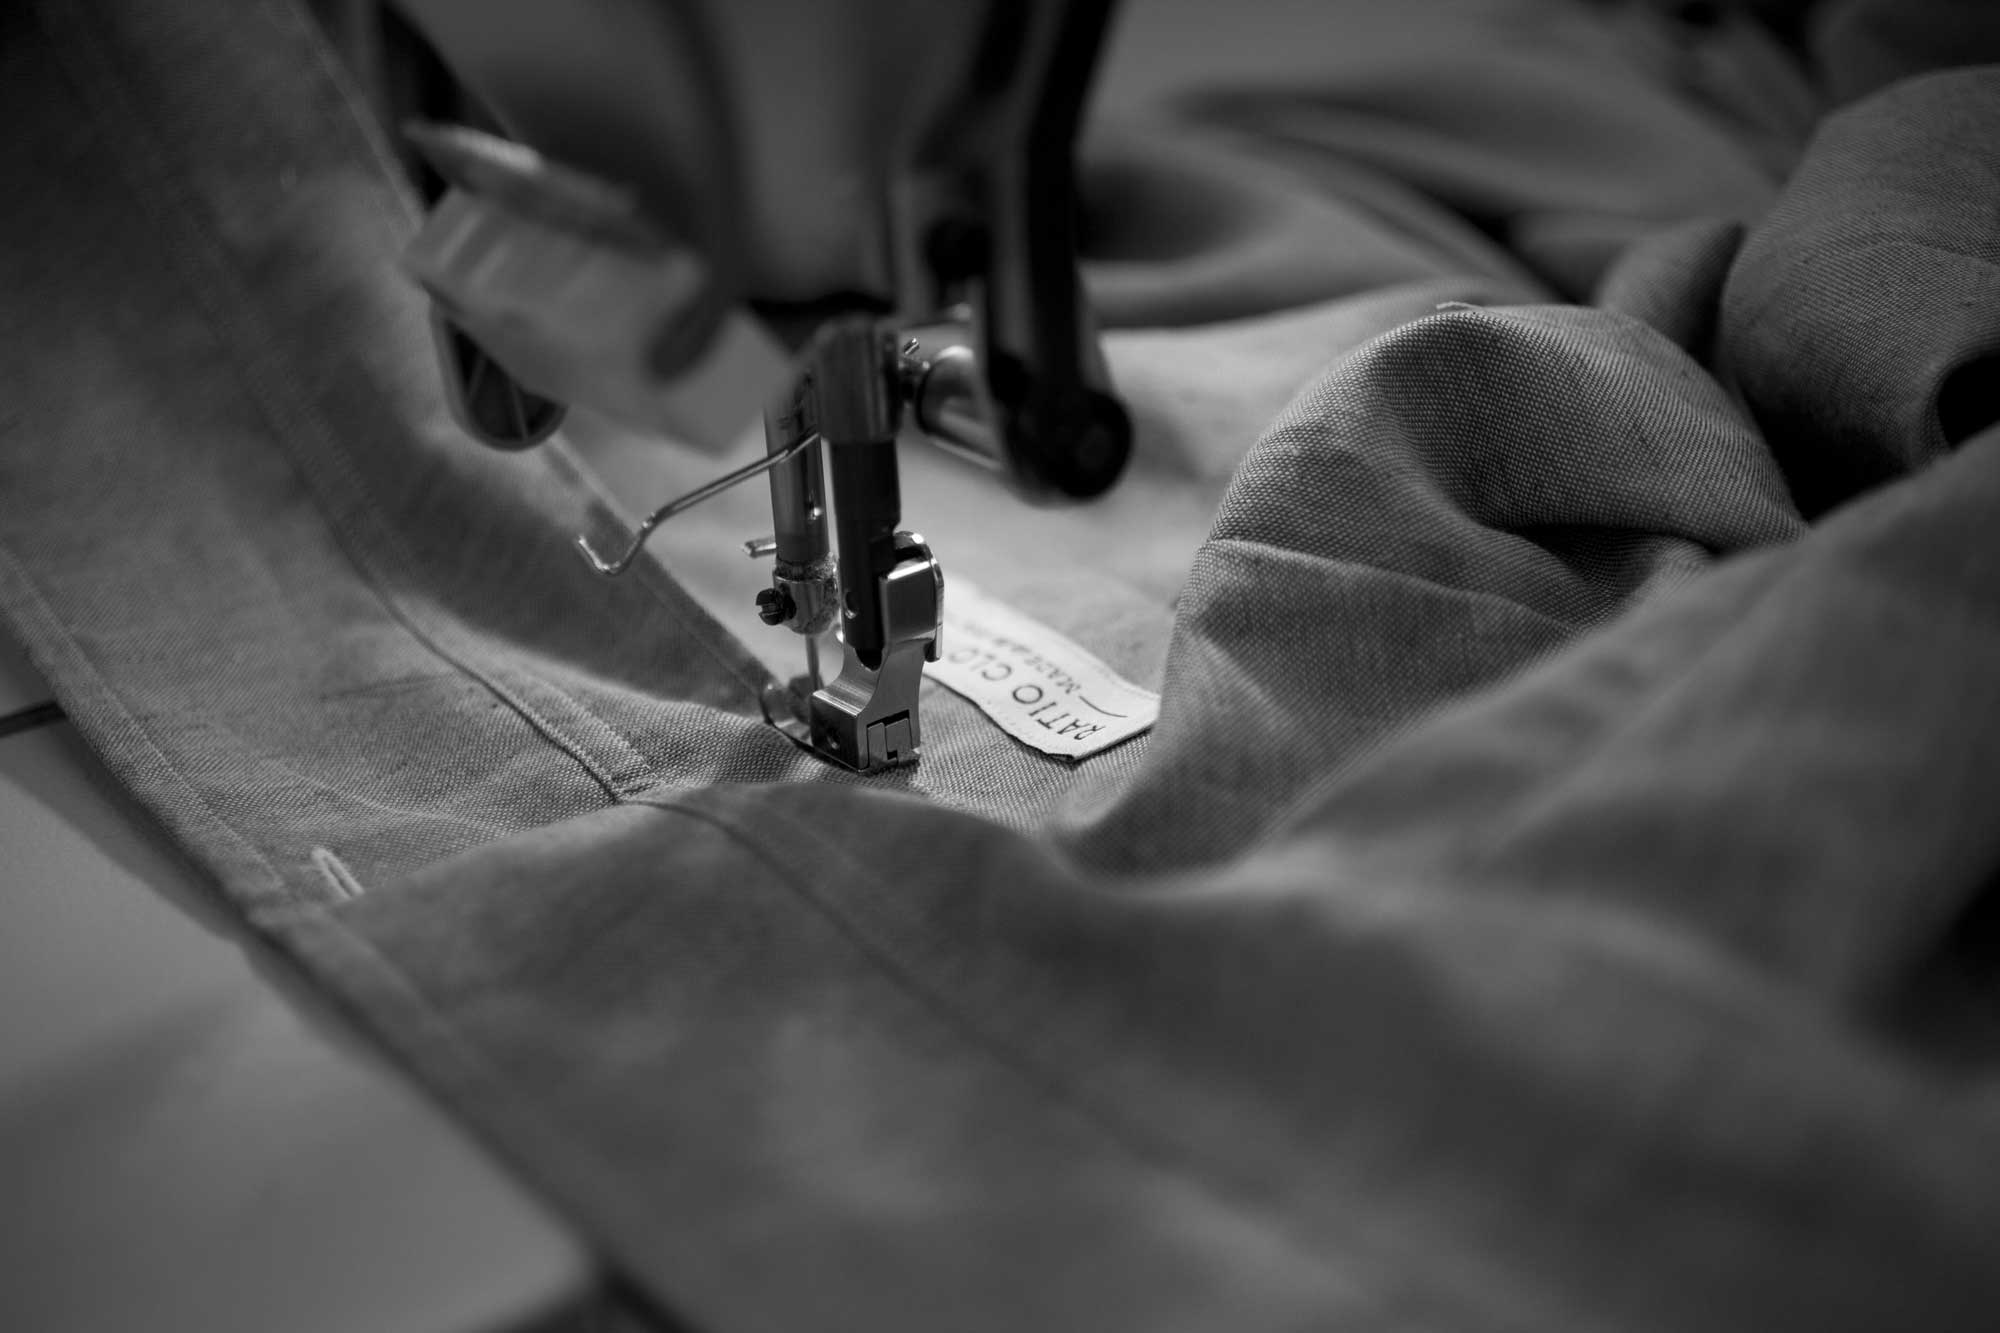 Sewing a shirt